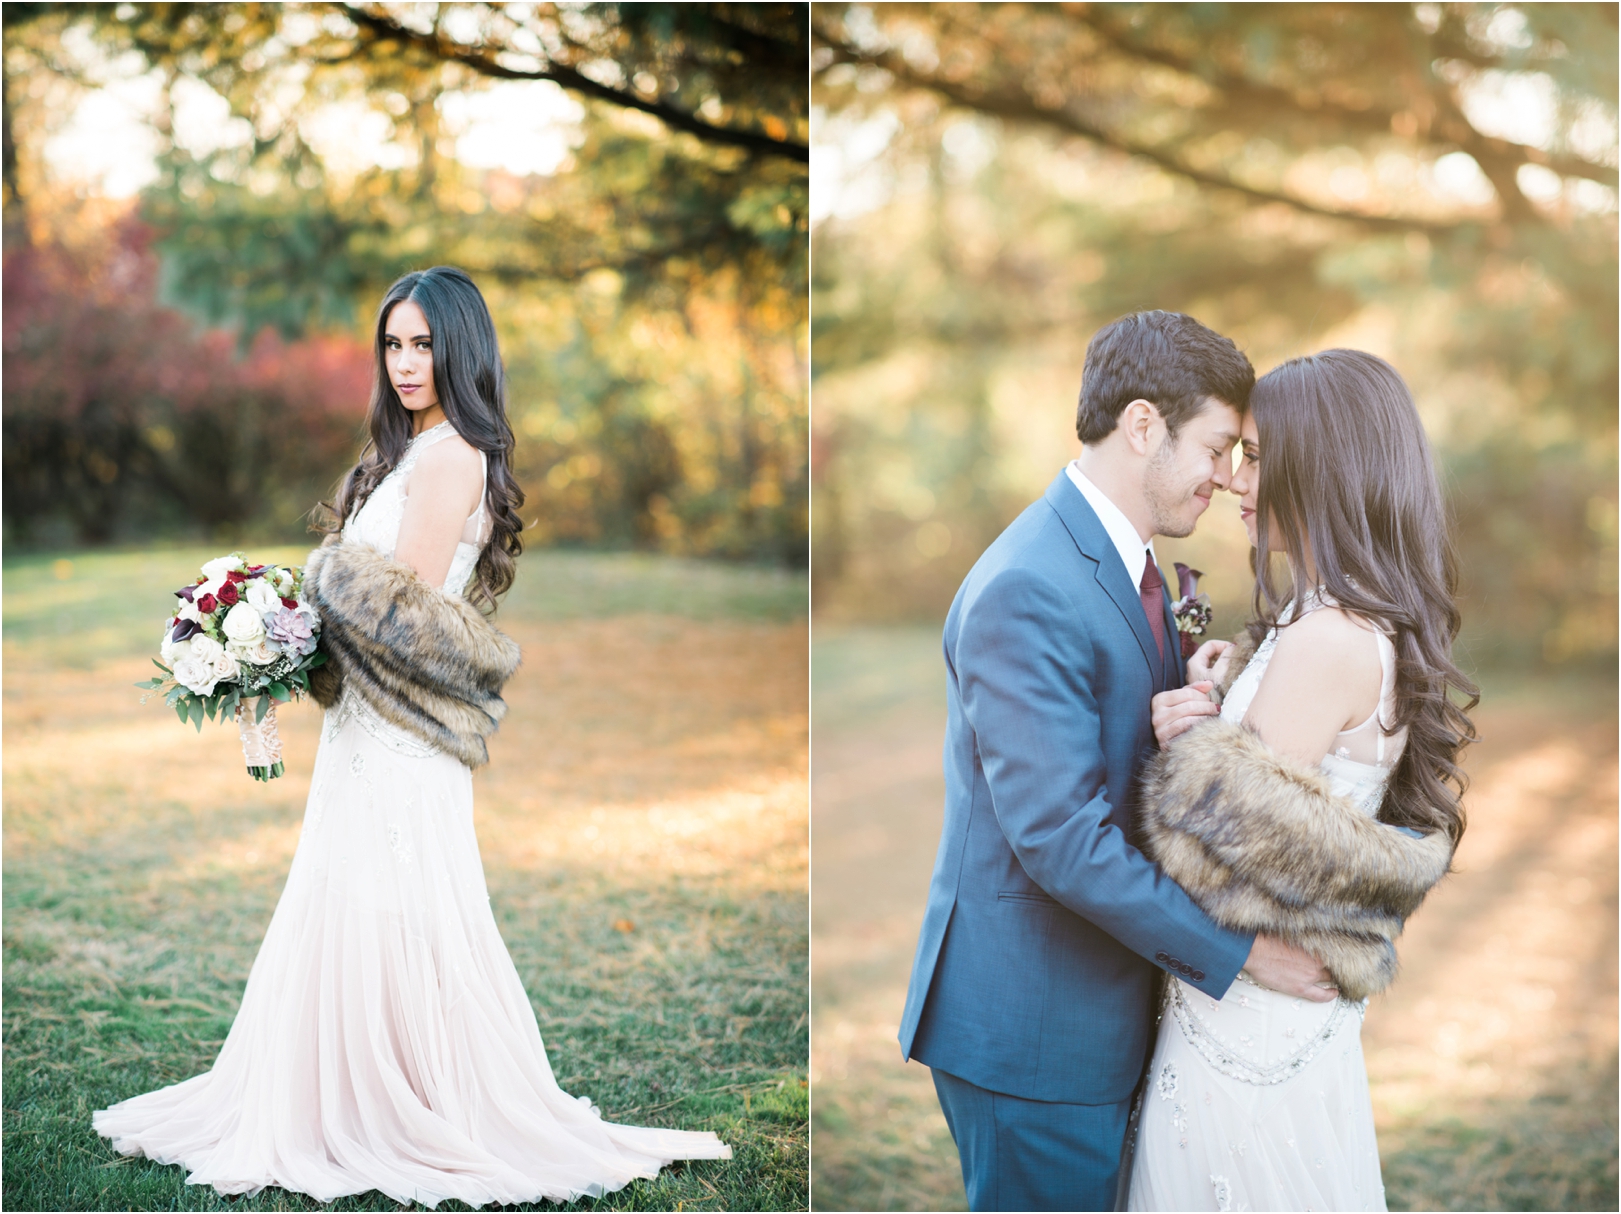 BHLDN blush wedding gown inspiration images